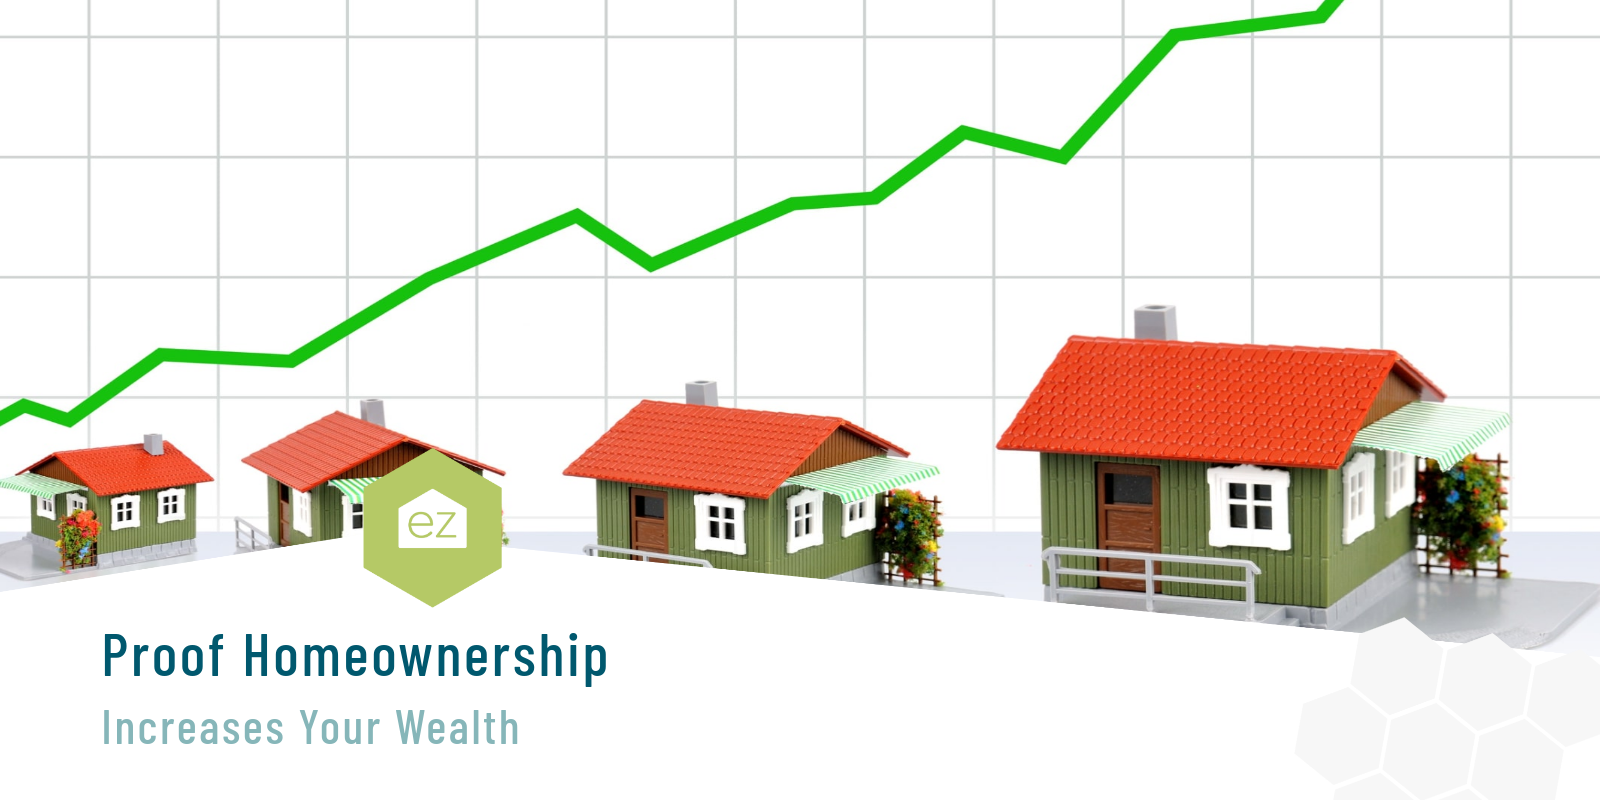 Homeownership Increases Wealth